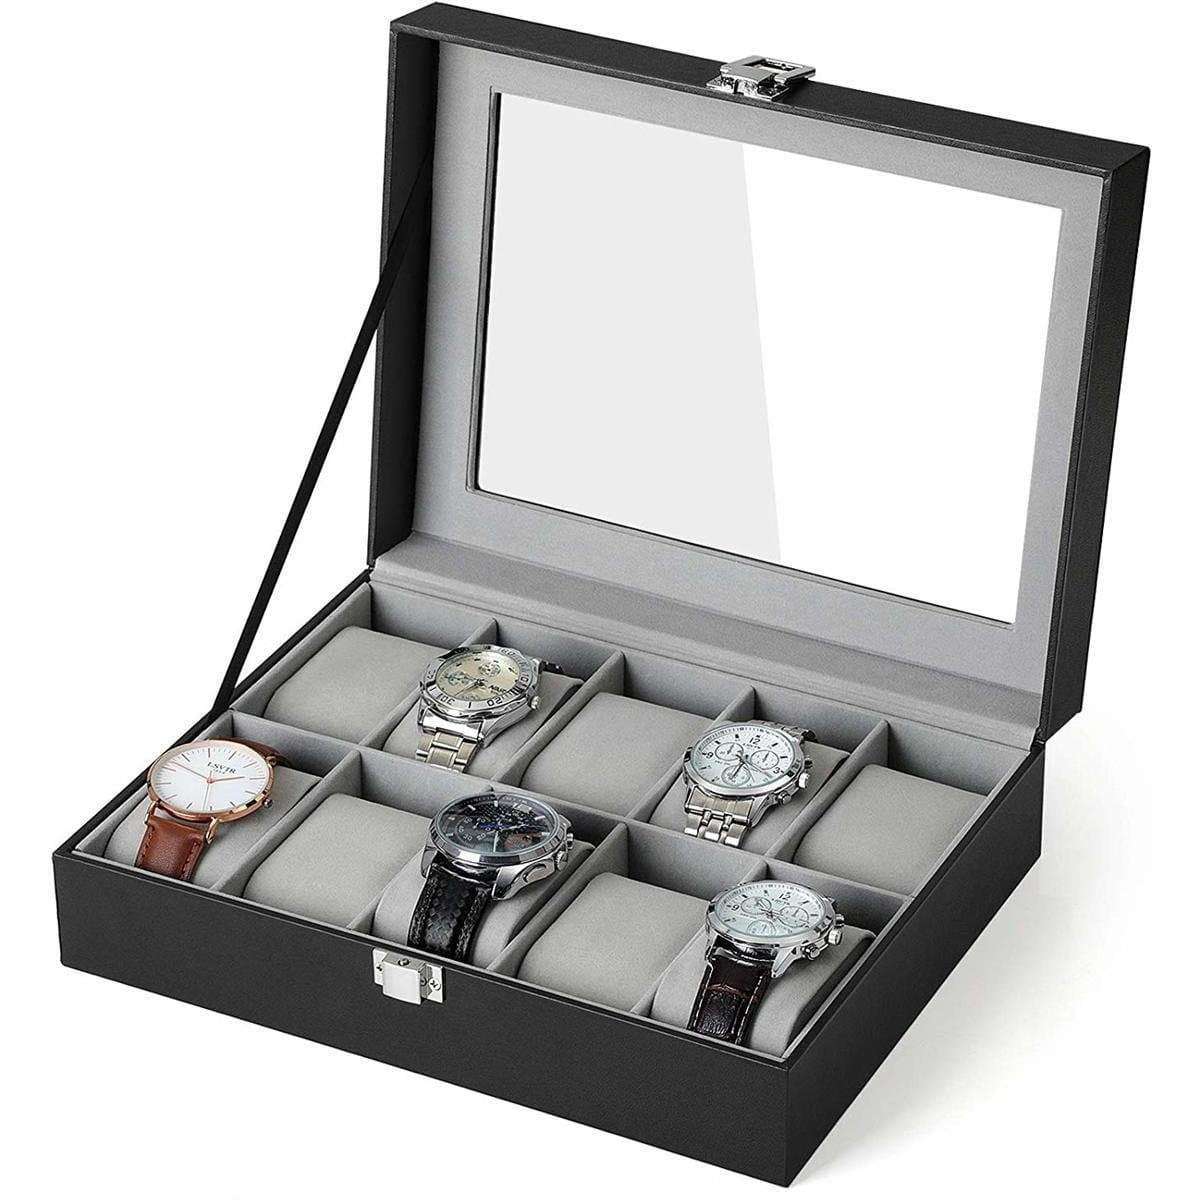 Nancy's Watch Box - Watch Case - Watch Storage - Storage Box for 10 Watches